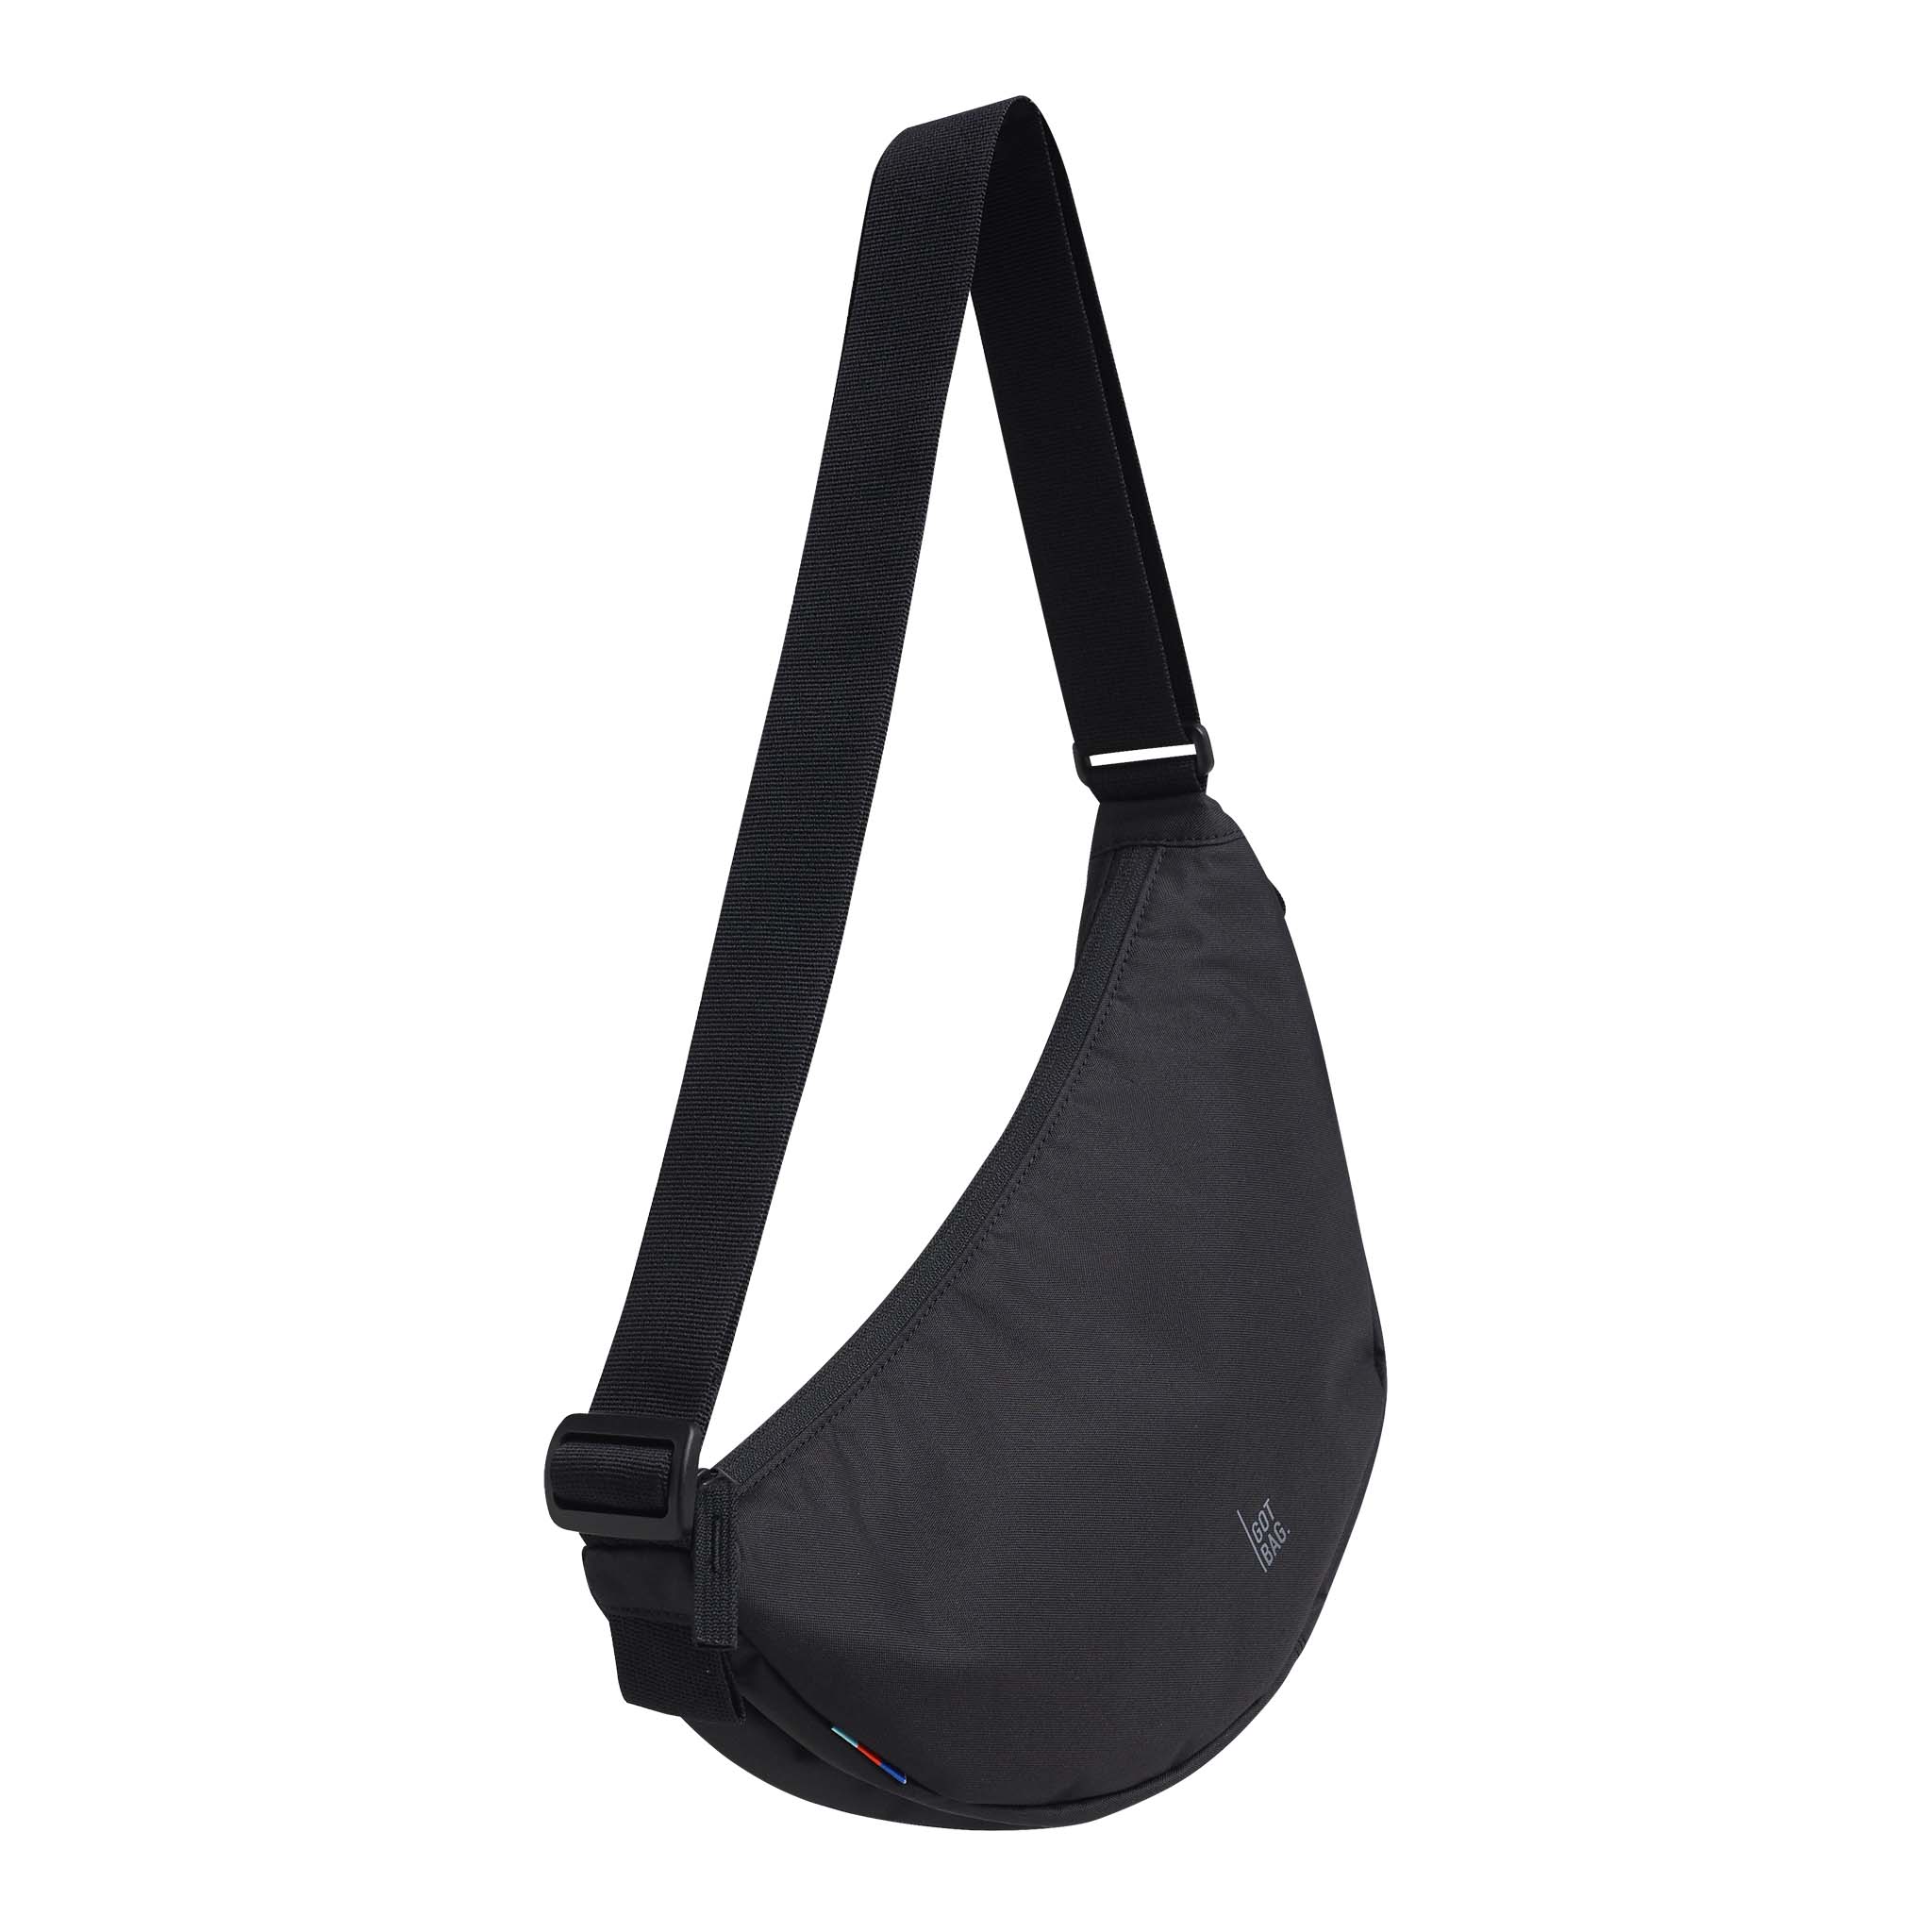 Team Malizia GOT Bag Moon bag small black